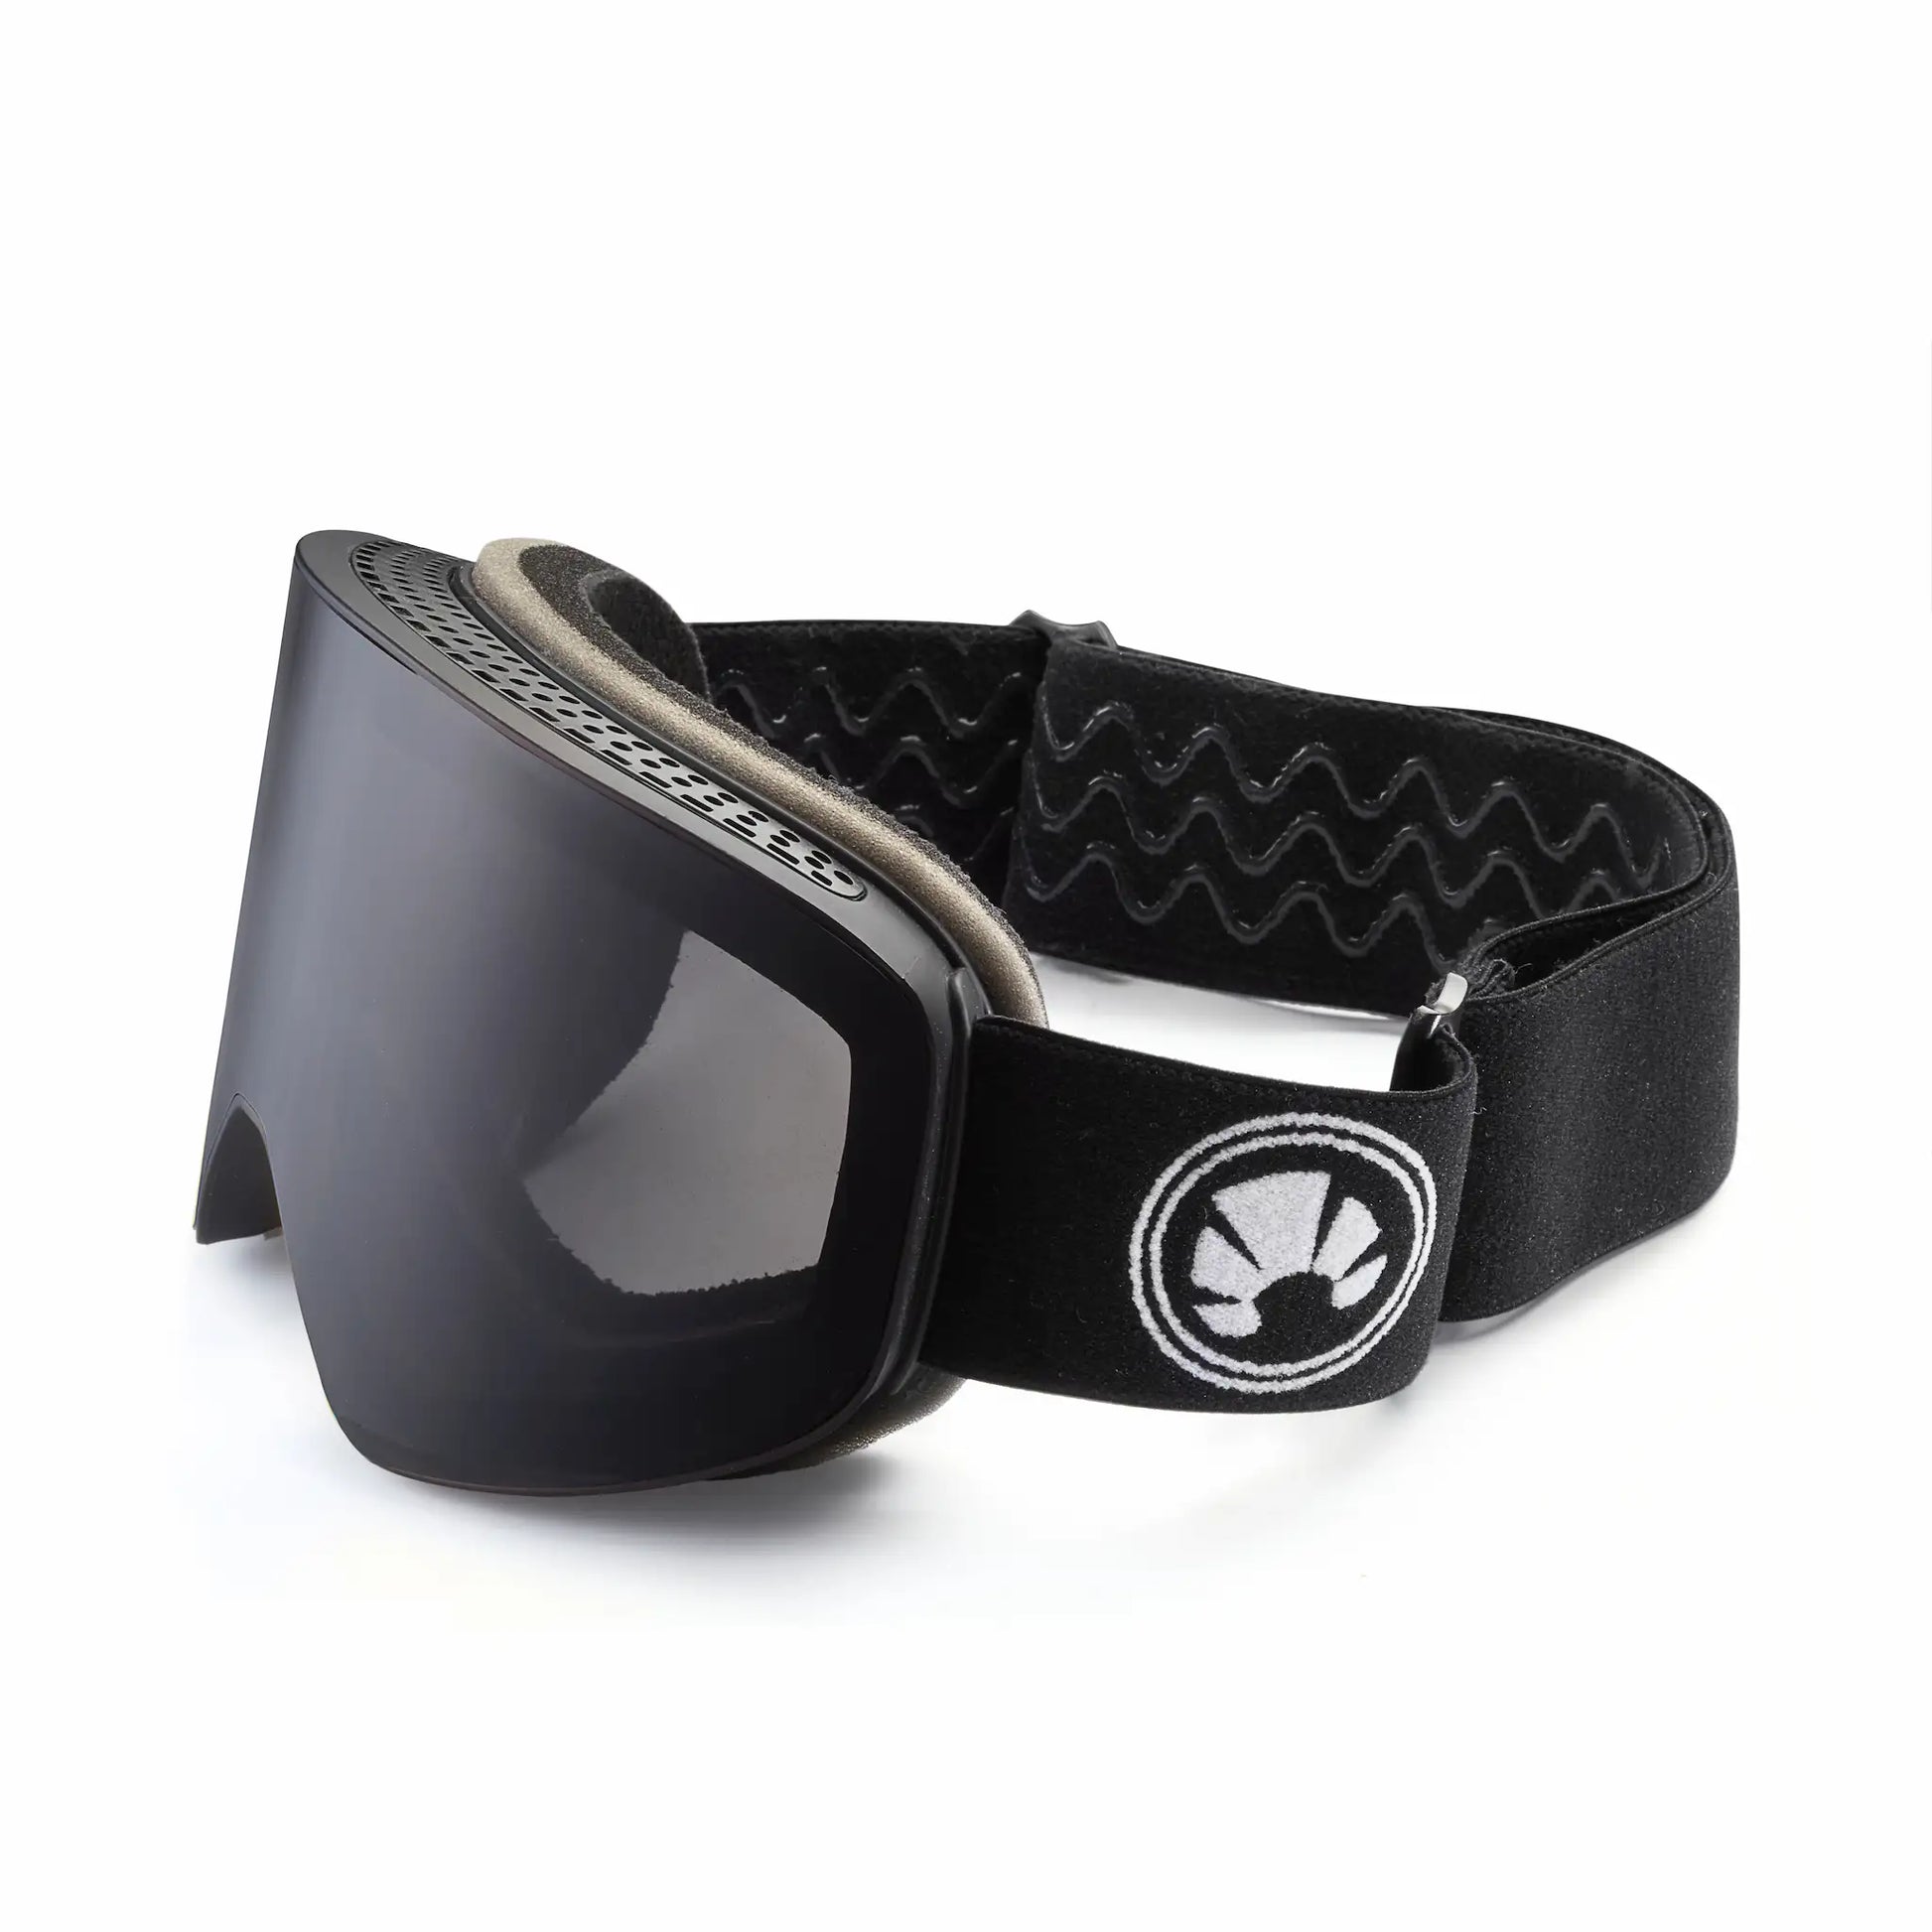 Bakedsnow frameless snowboard goggles with a black lens